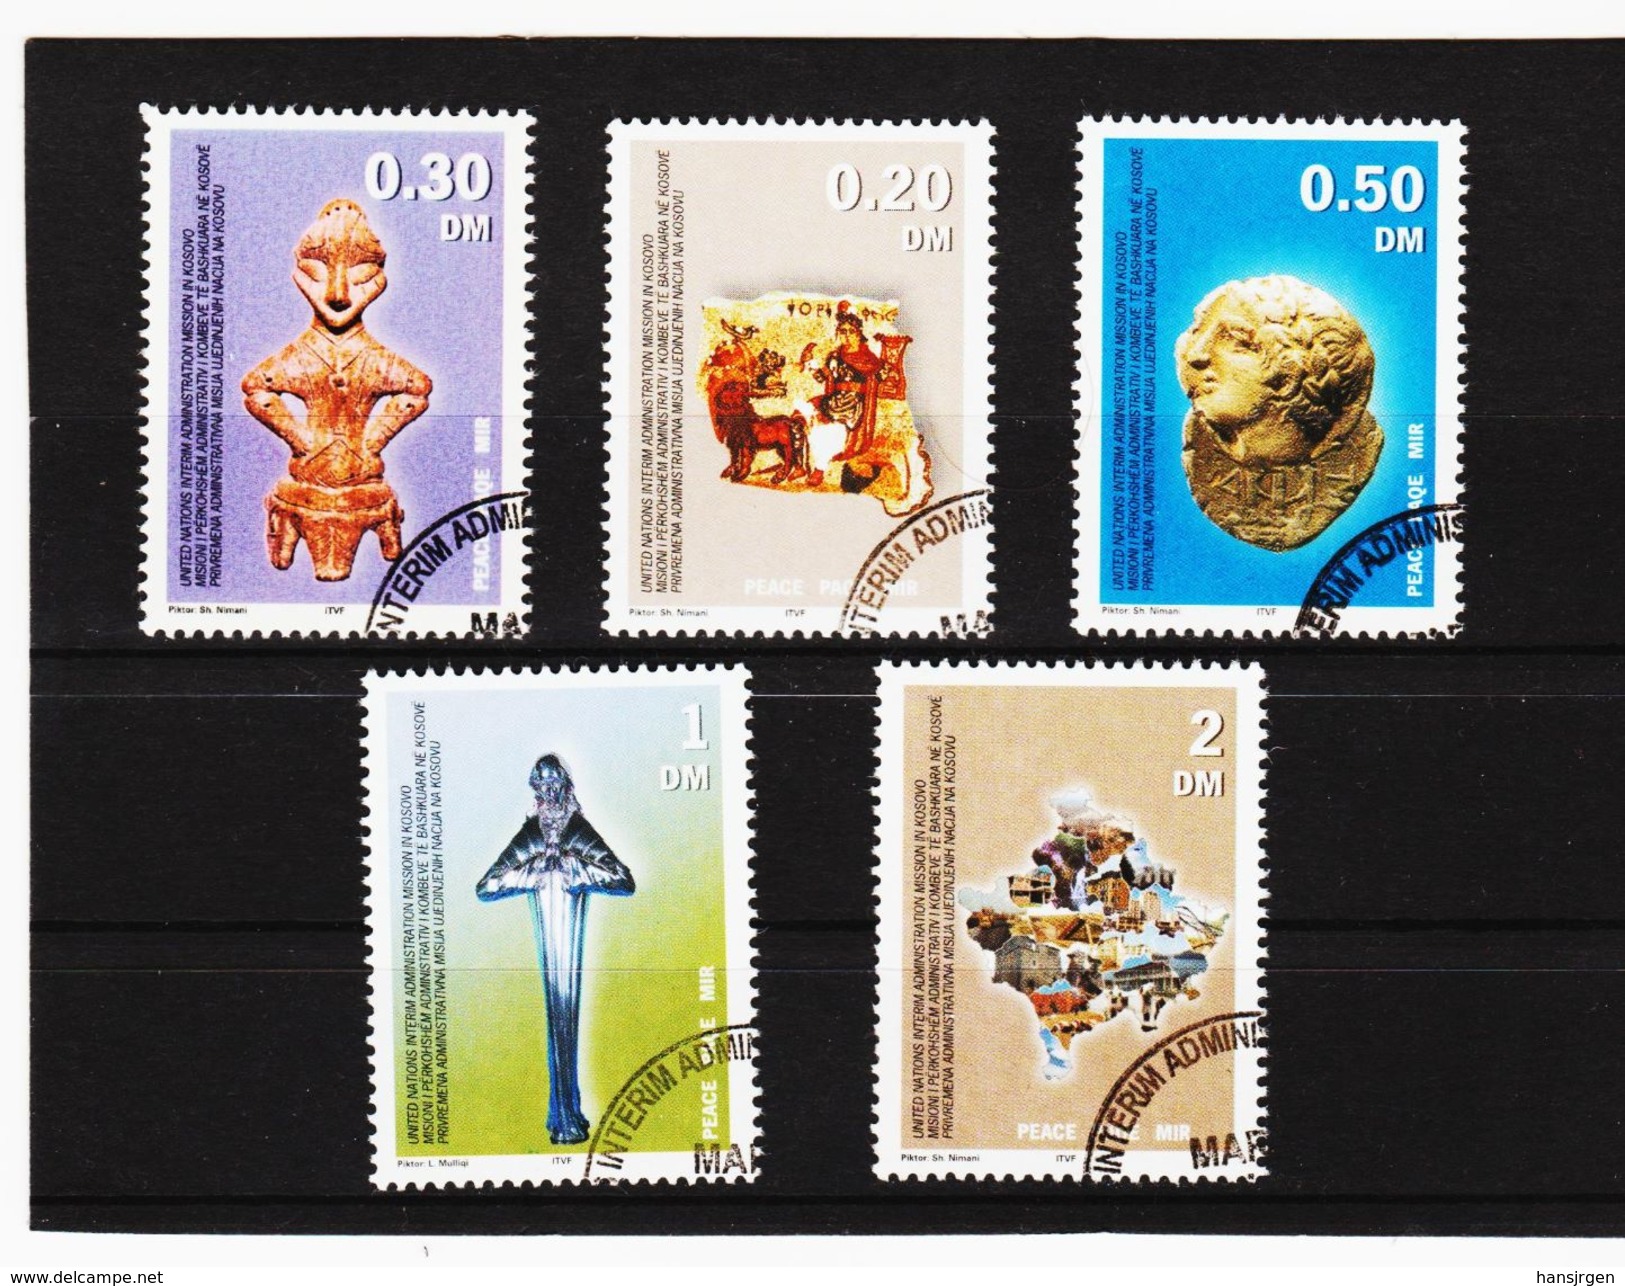 MOO616 UNO KOSOVO UNMIK  INTERIMSVERWALTUNG Im KOSOVO  2000 MICHL 1-5 Used / Gestempelt - Used Stamps